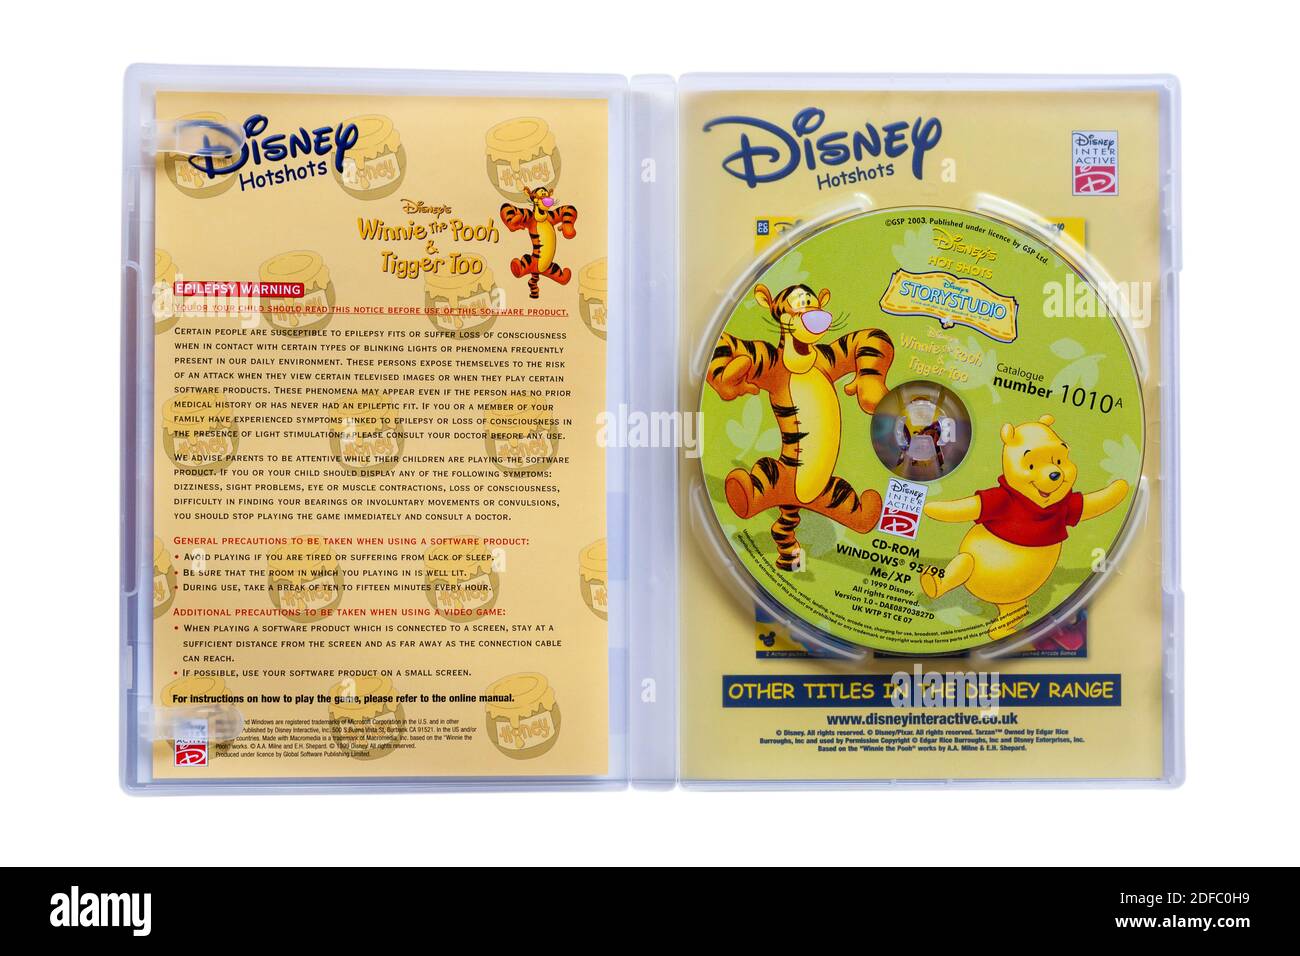 Epilepsy warning on Disney Hotshots Disney's Winnie the Pooh & Tigger Too PC CD interactive story studio isolated on white background Stock Photo